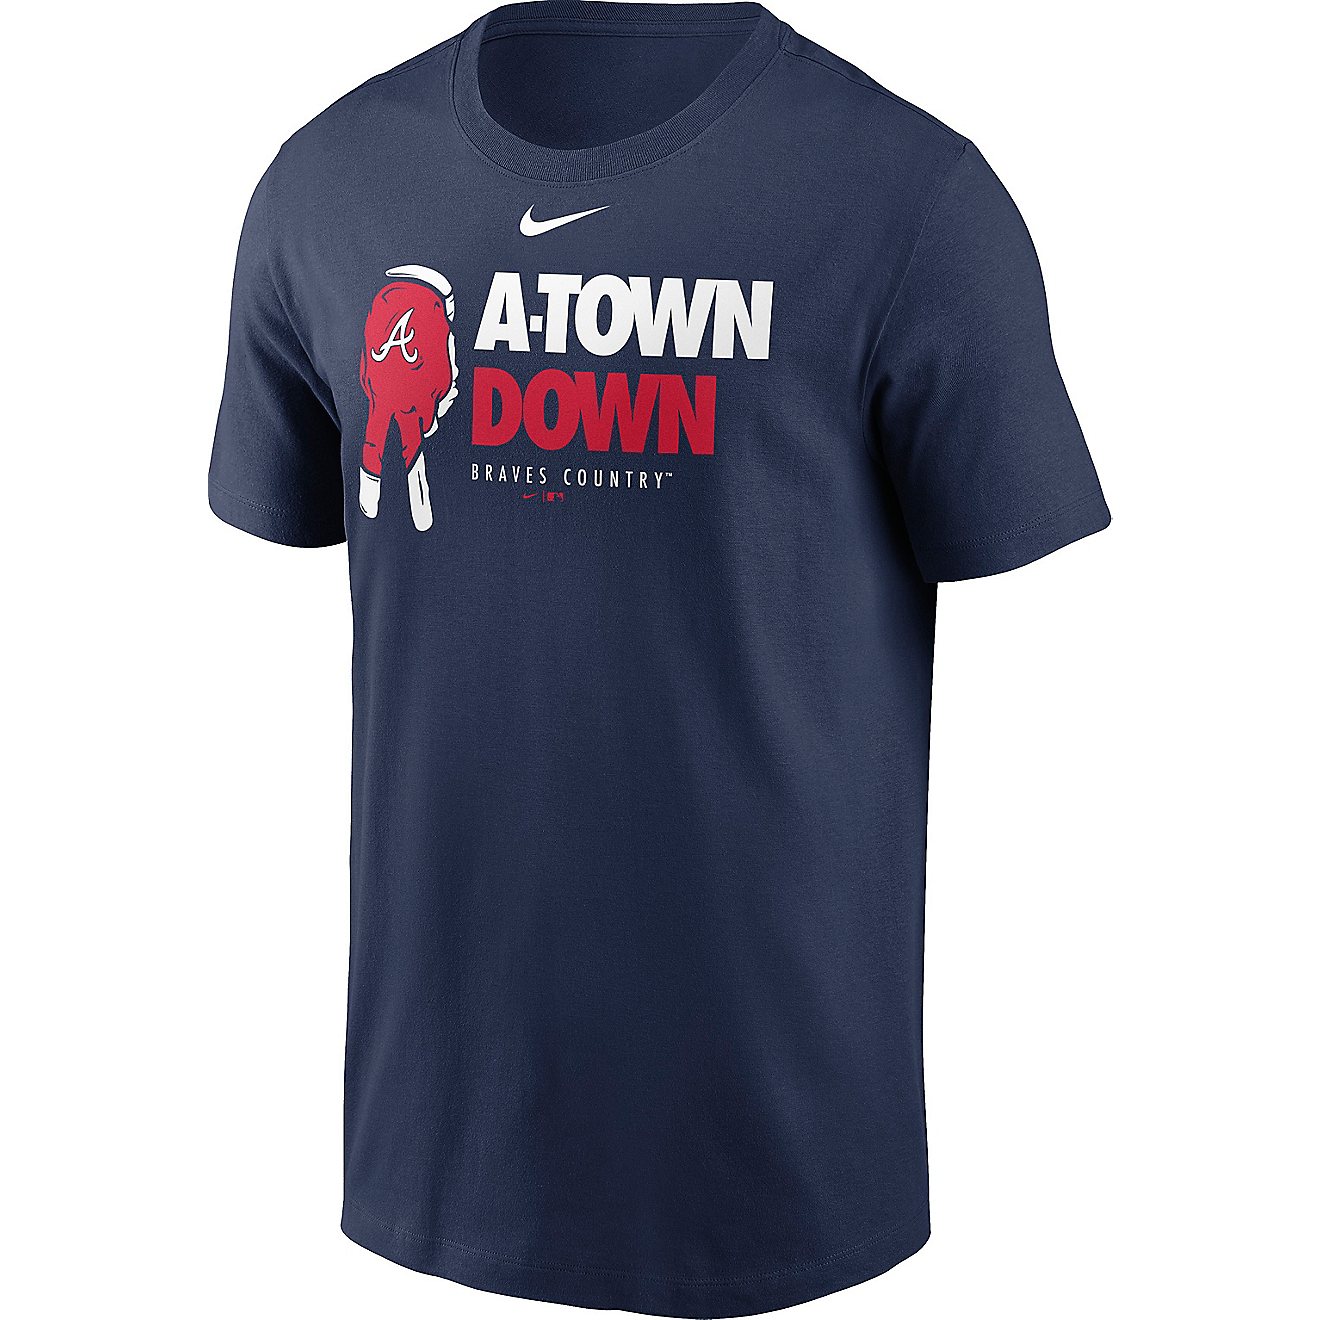 Nike Men's Atlanta Braves Town Down T-shirt                                                                                      - view number 1